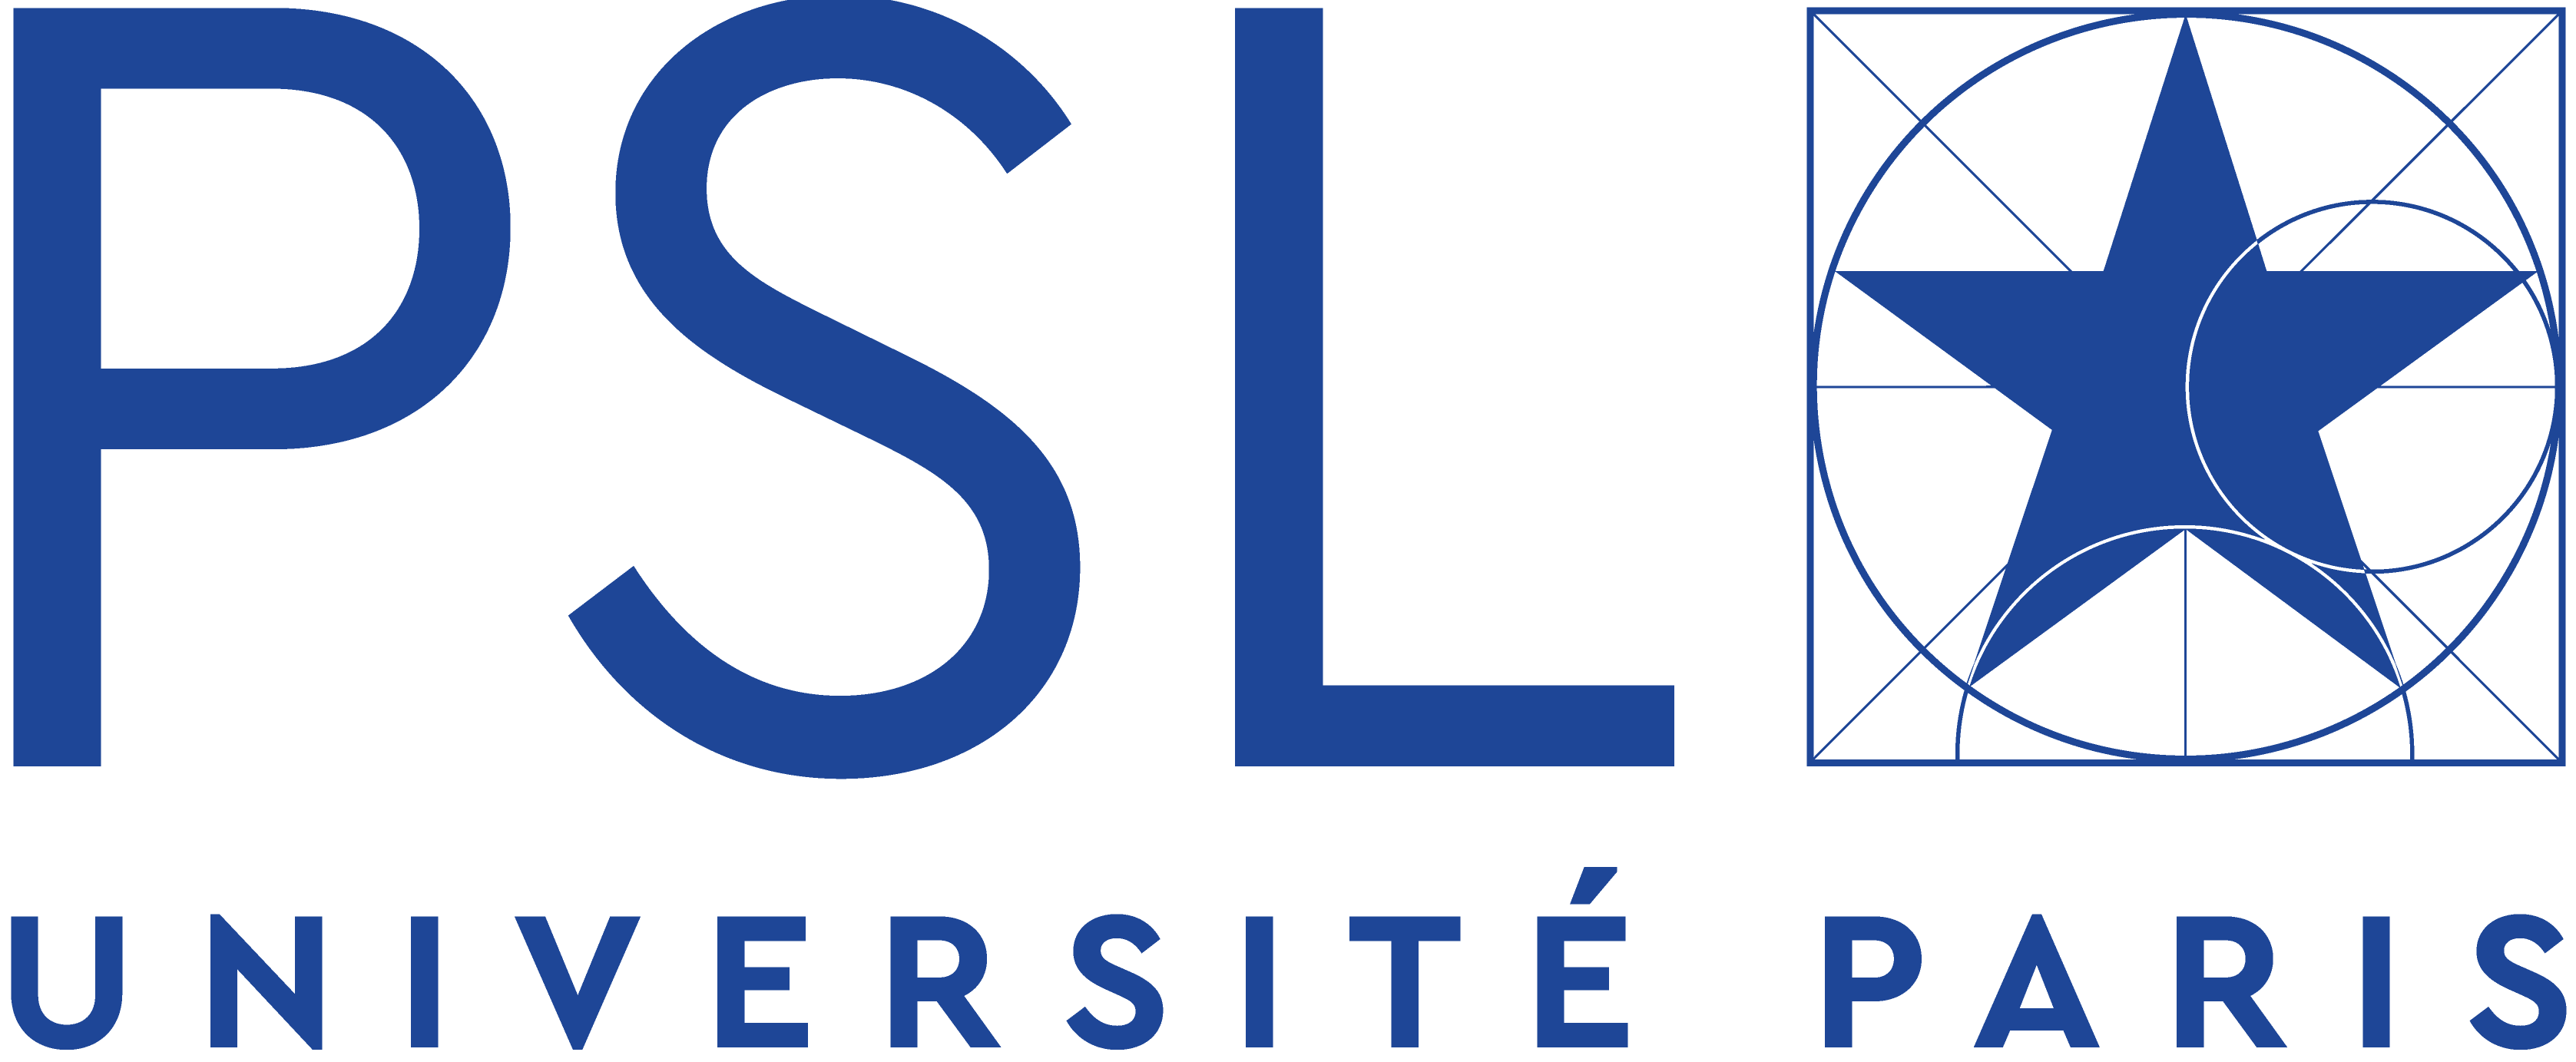 PSL_Logo -nov-2017